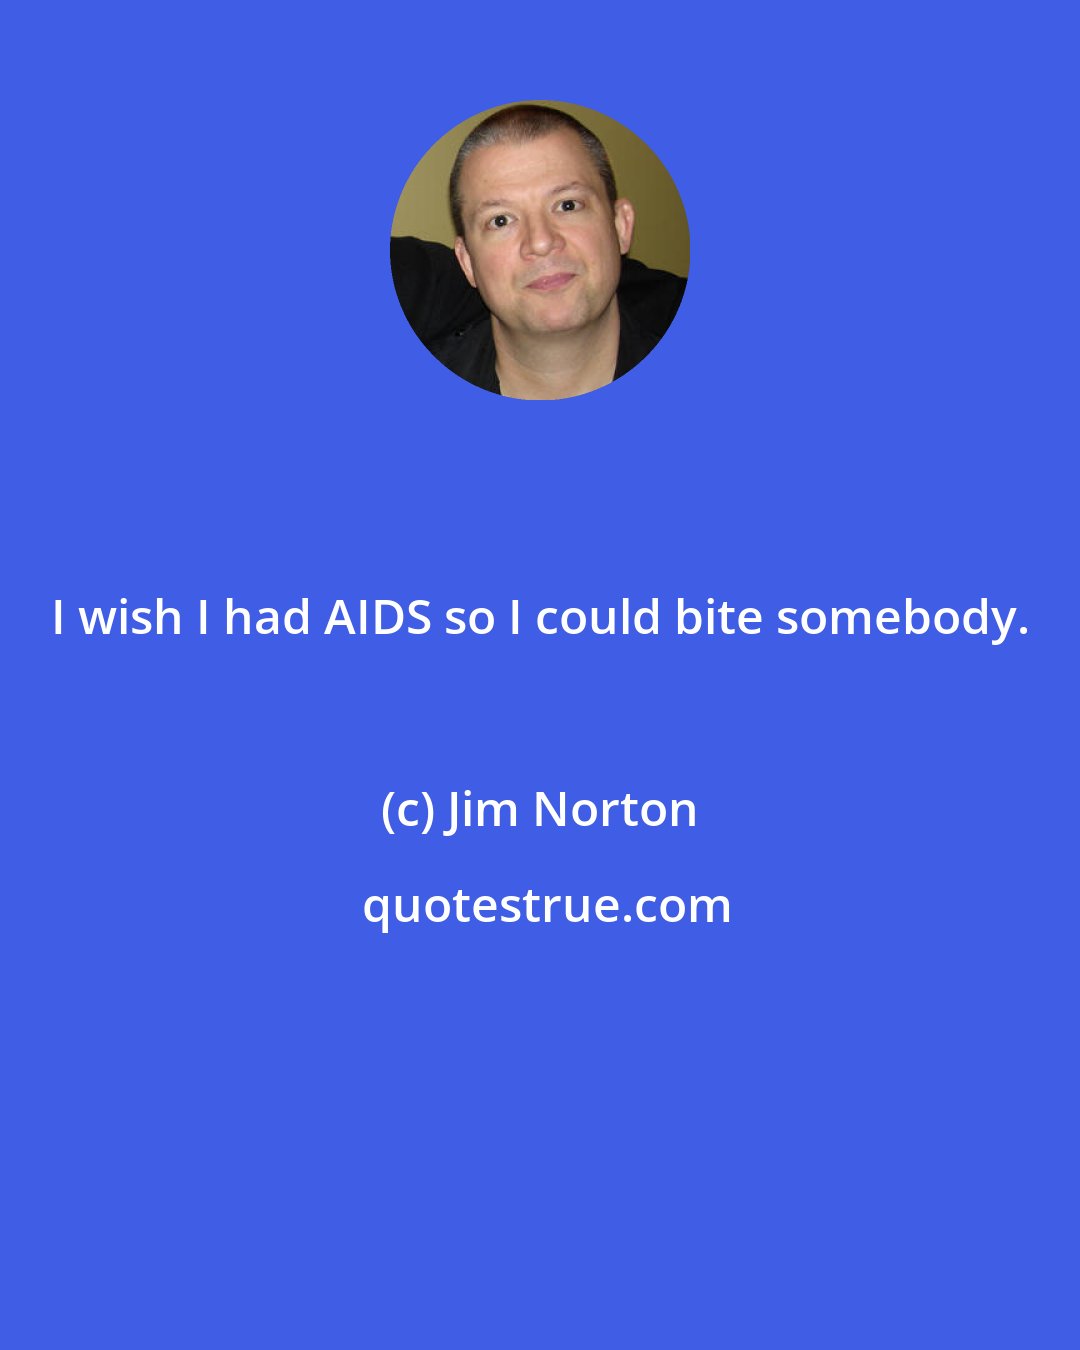 Jim Norton: I wish I had AIDS so I could bite somebody.